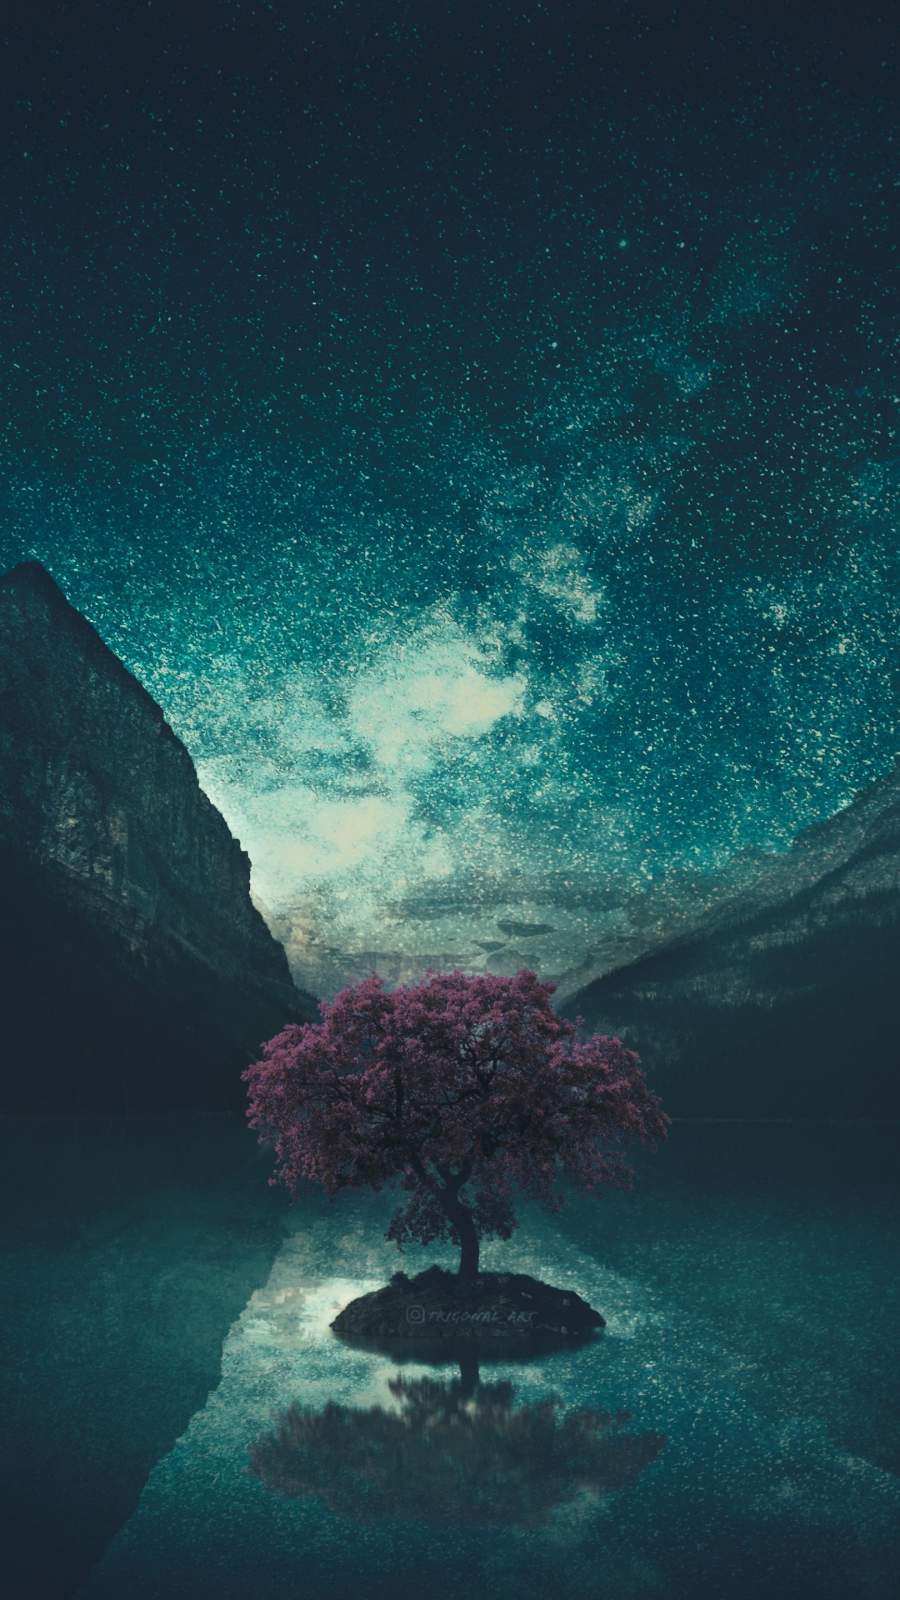 Tree And Stars IPhone Wallpaper Wallpaper, iPhone Wallpaper